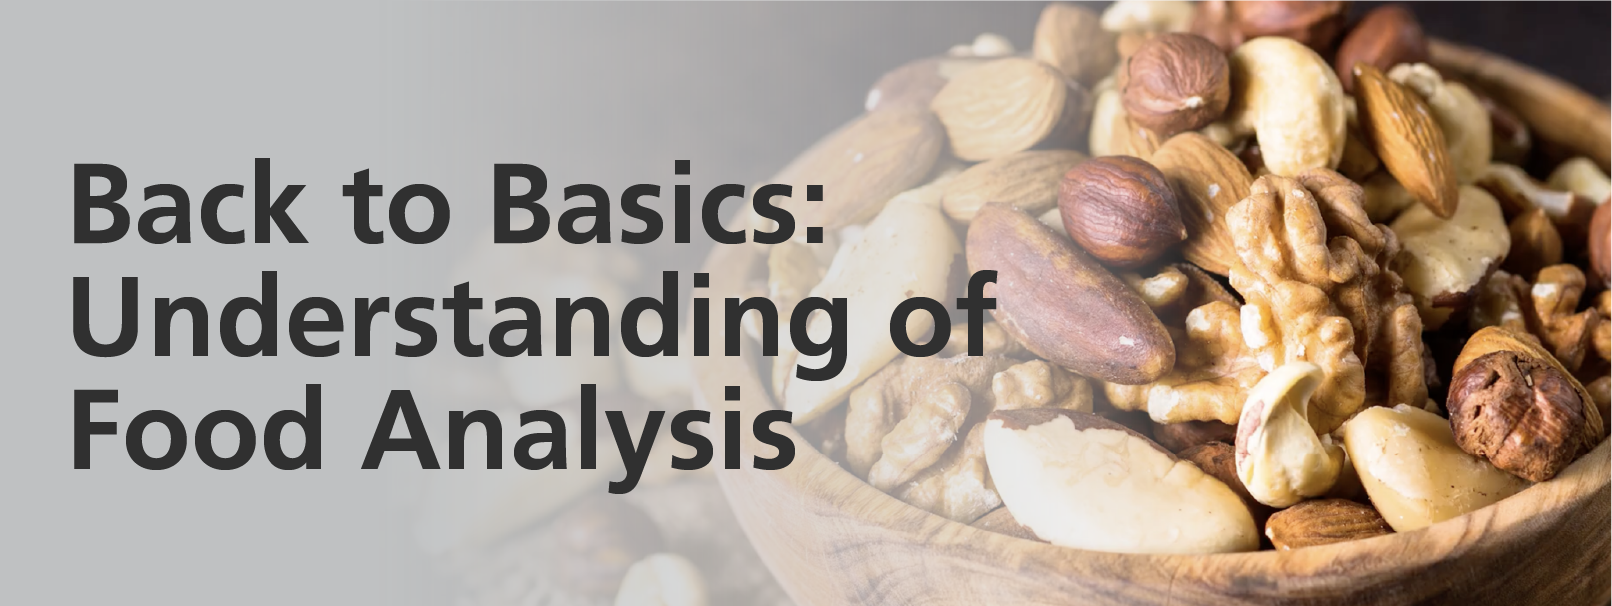 Back to Basics, Understanding of Food Analysis